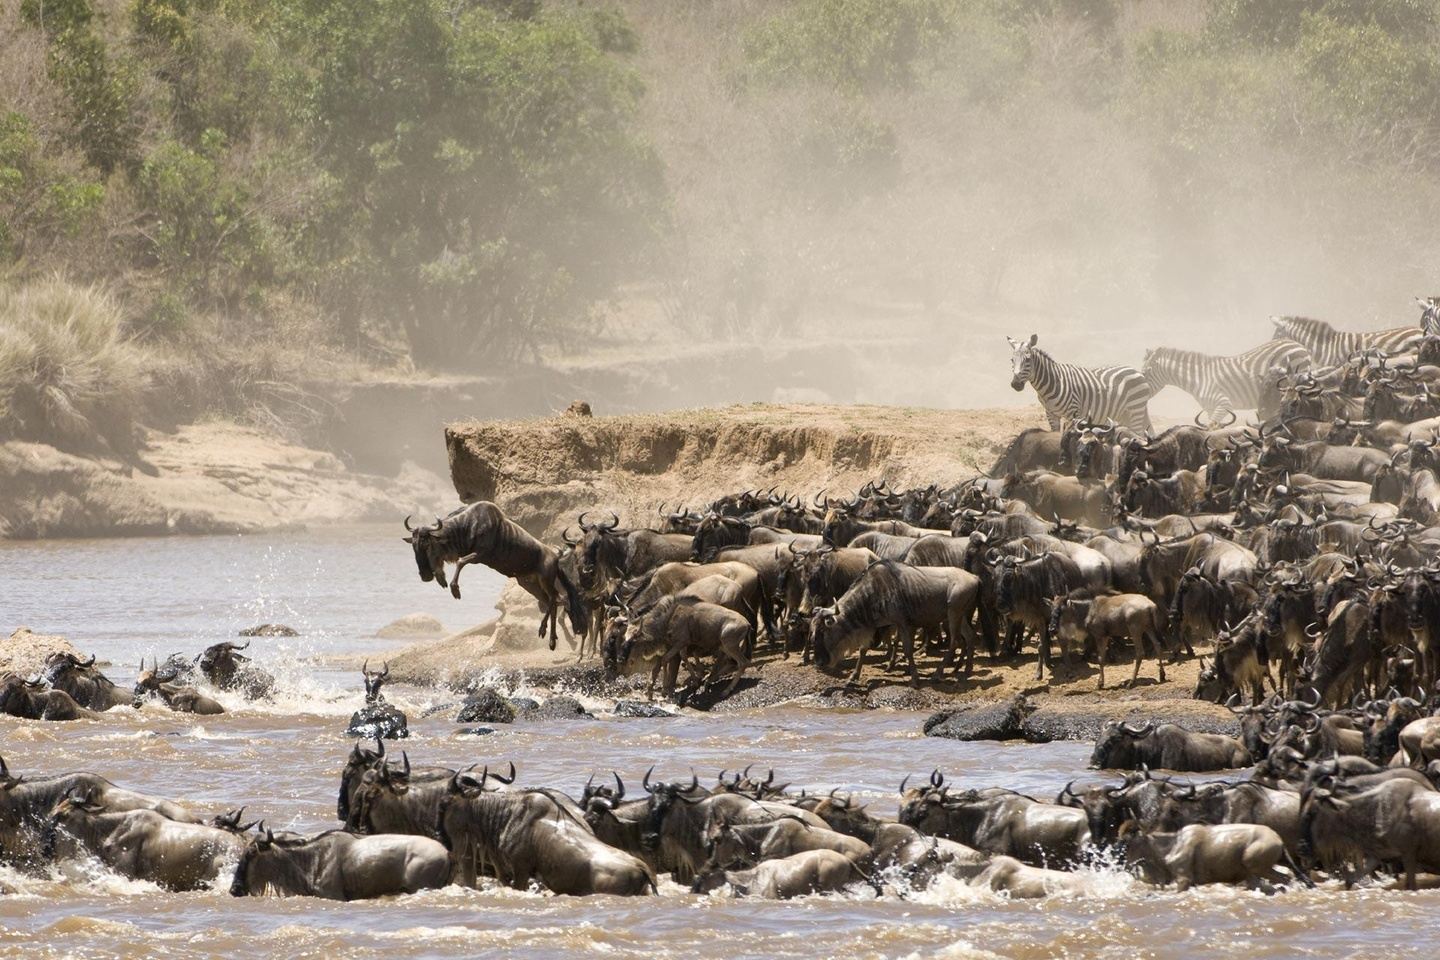 The Soul of Kenya & Tanzania Safari